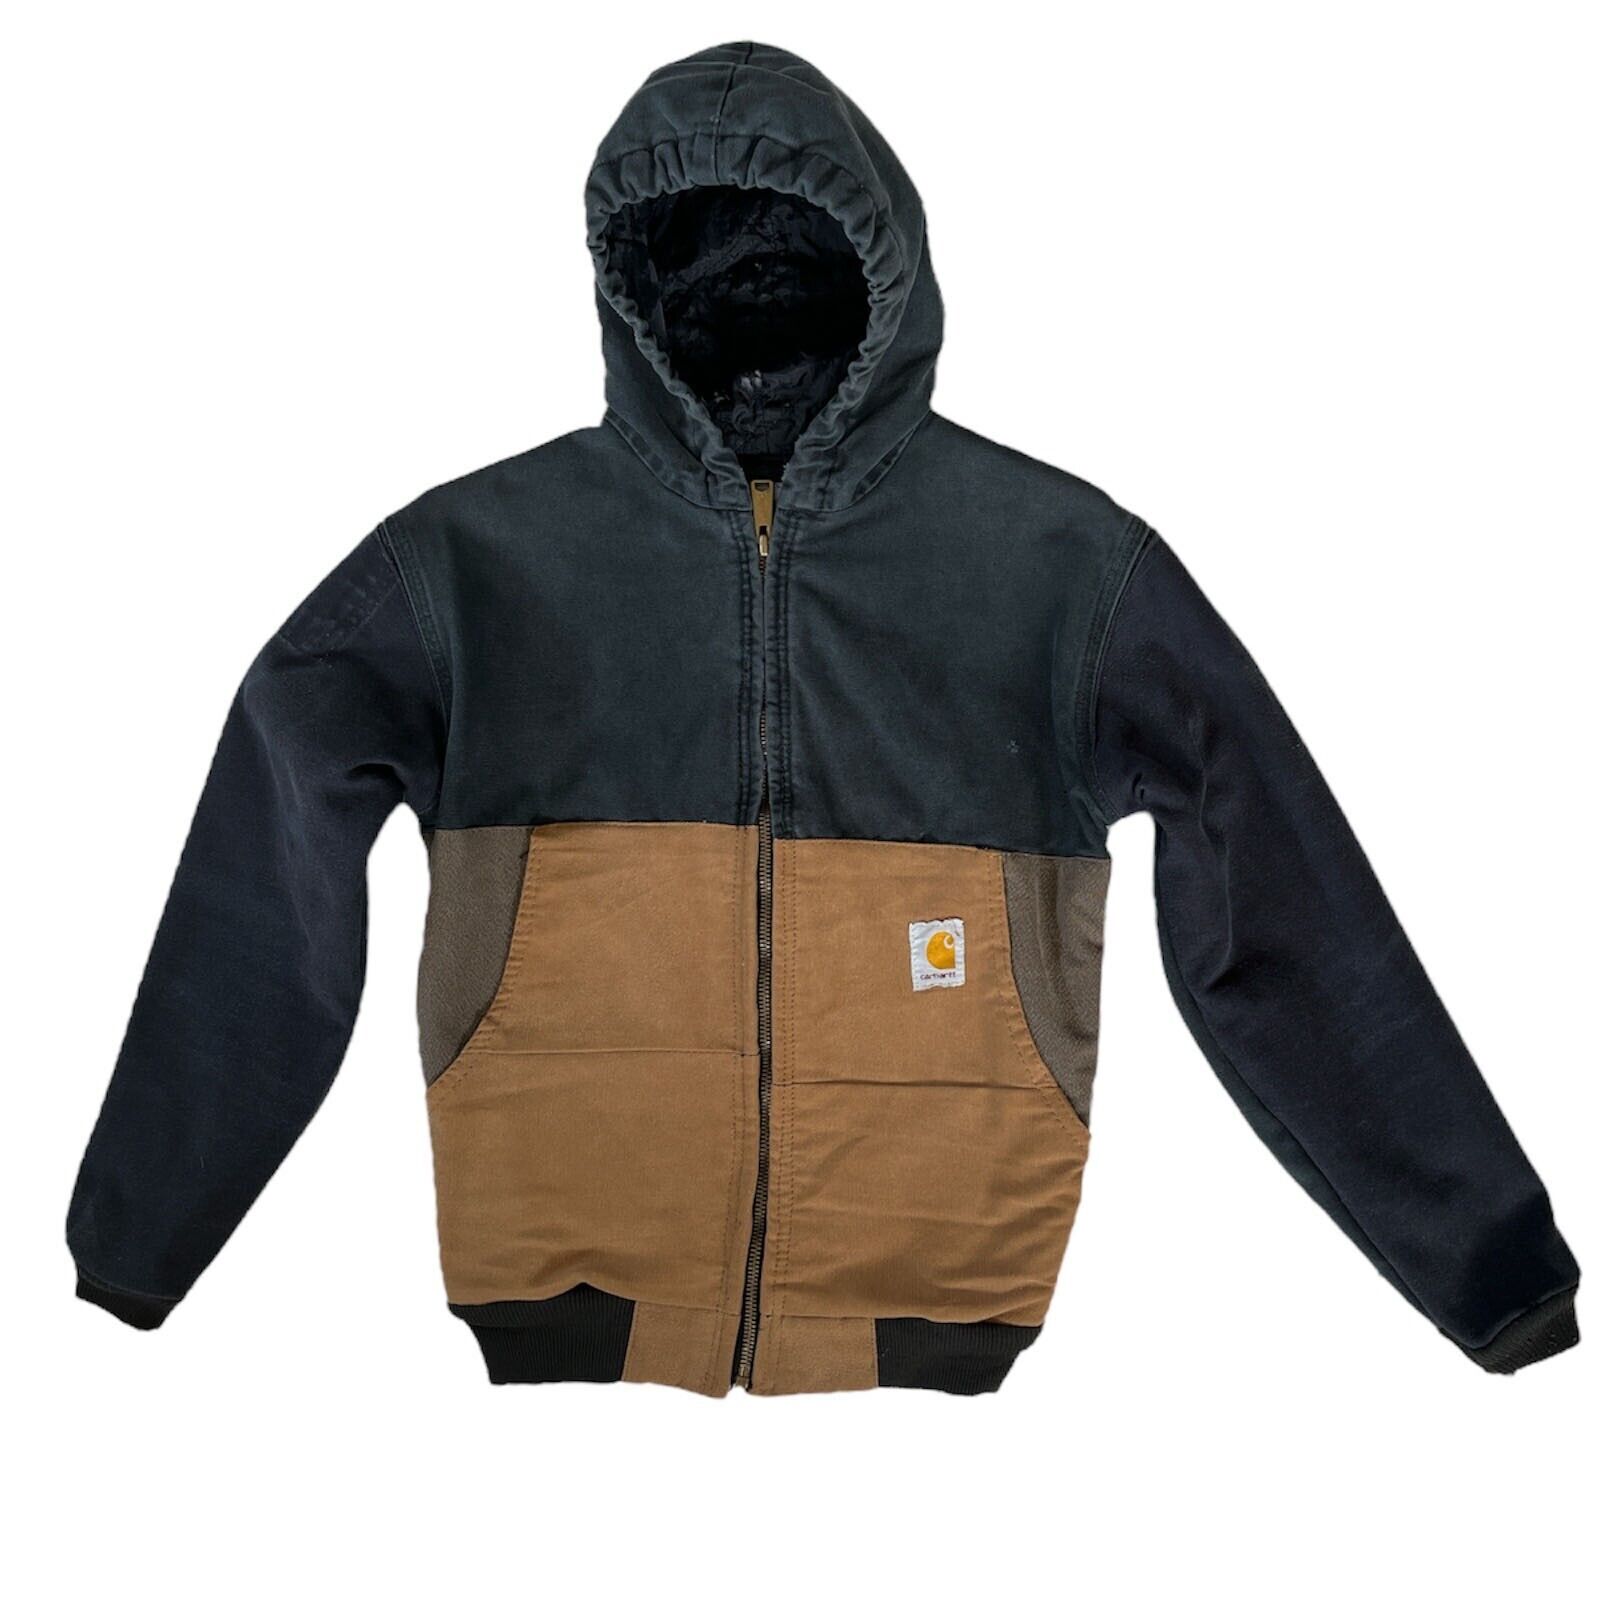 Carhartt Reworked Jacket Workwear Hooded Vintage Bomber Boys M(9-10 Years)